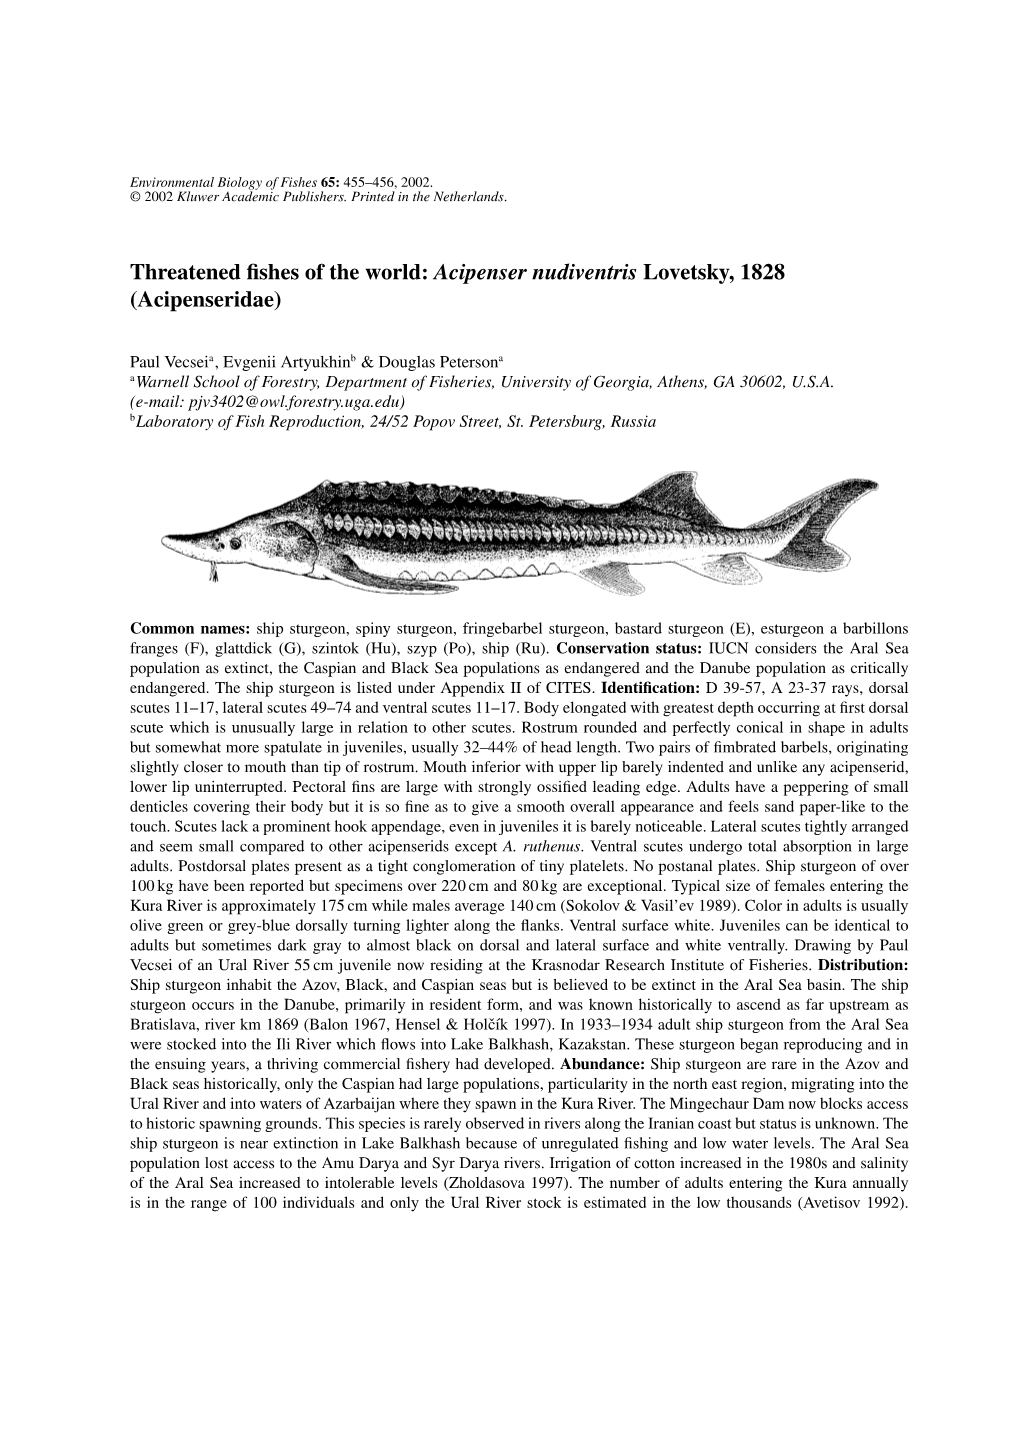 Threatened Fishes of the World: Acipenser Nudiventris Lovetsky, 1828